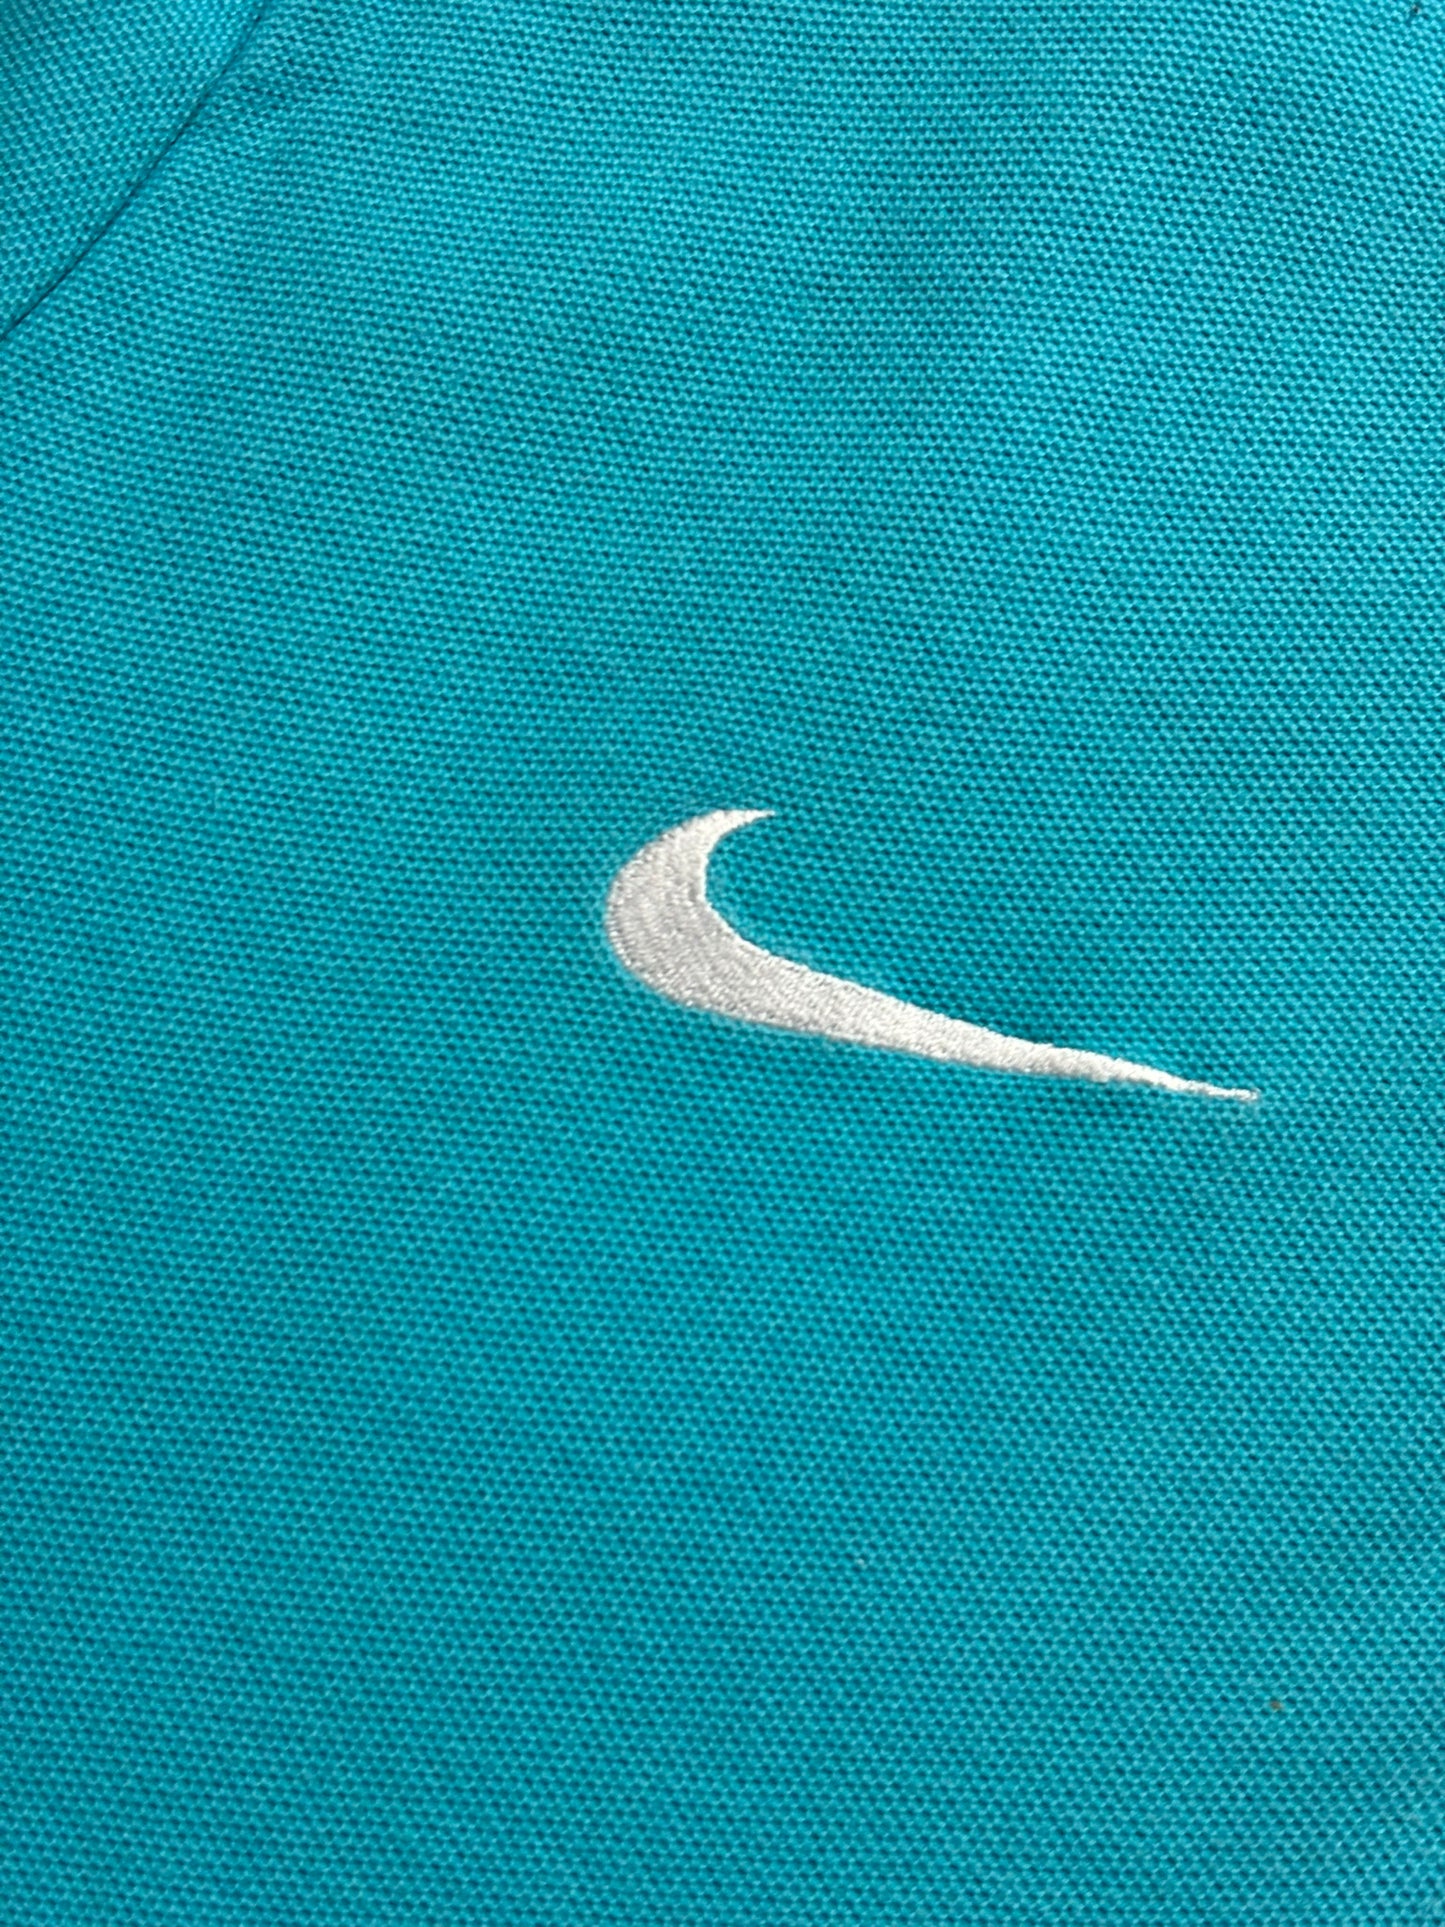 Polito Nike retro logo bordado - Large